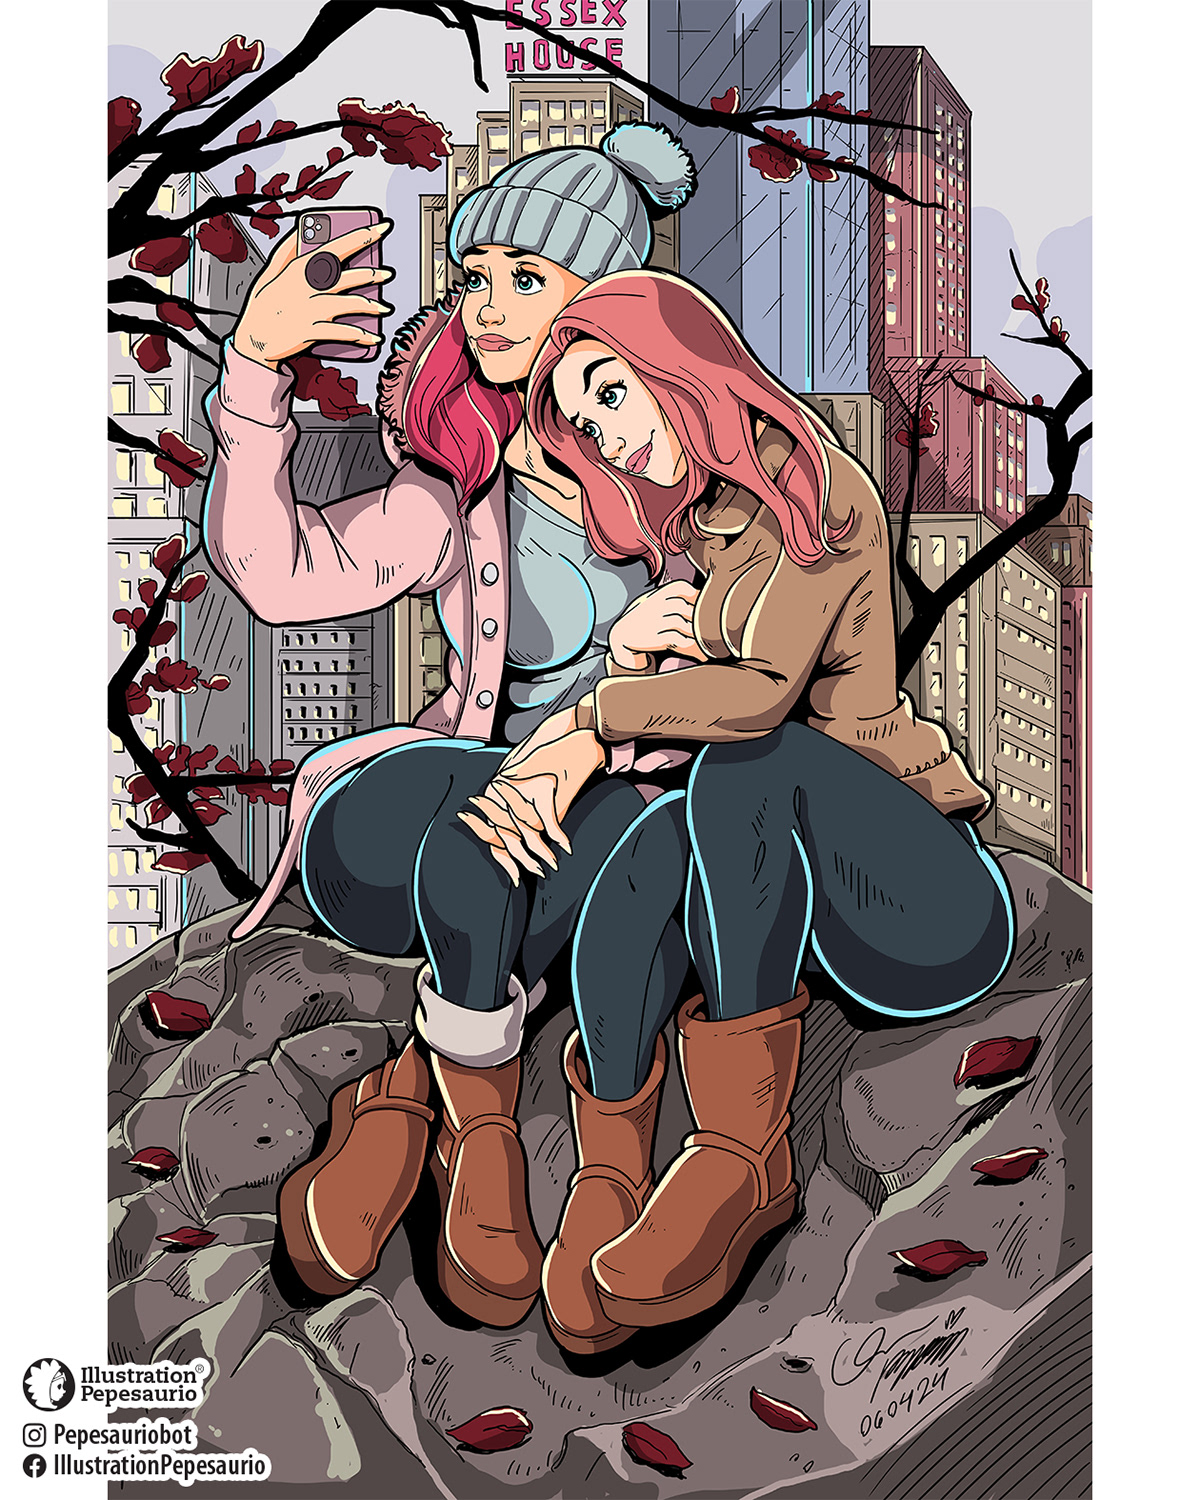 ILLUSTRATION  girls Comic Book Graphic Novel comc